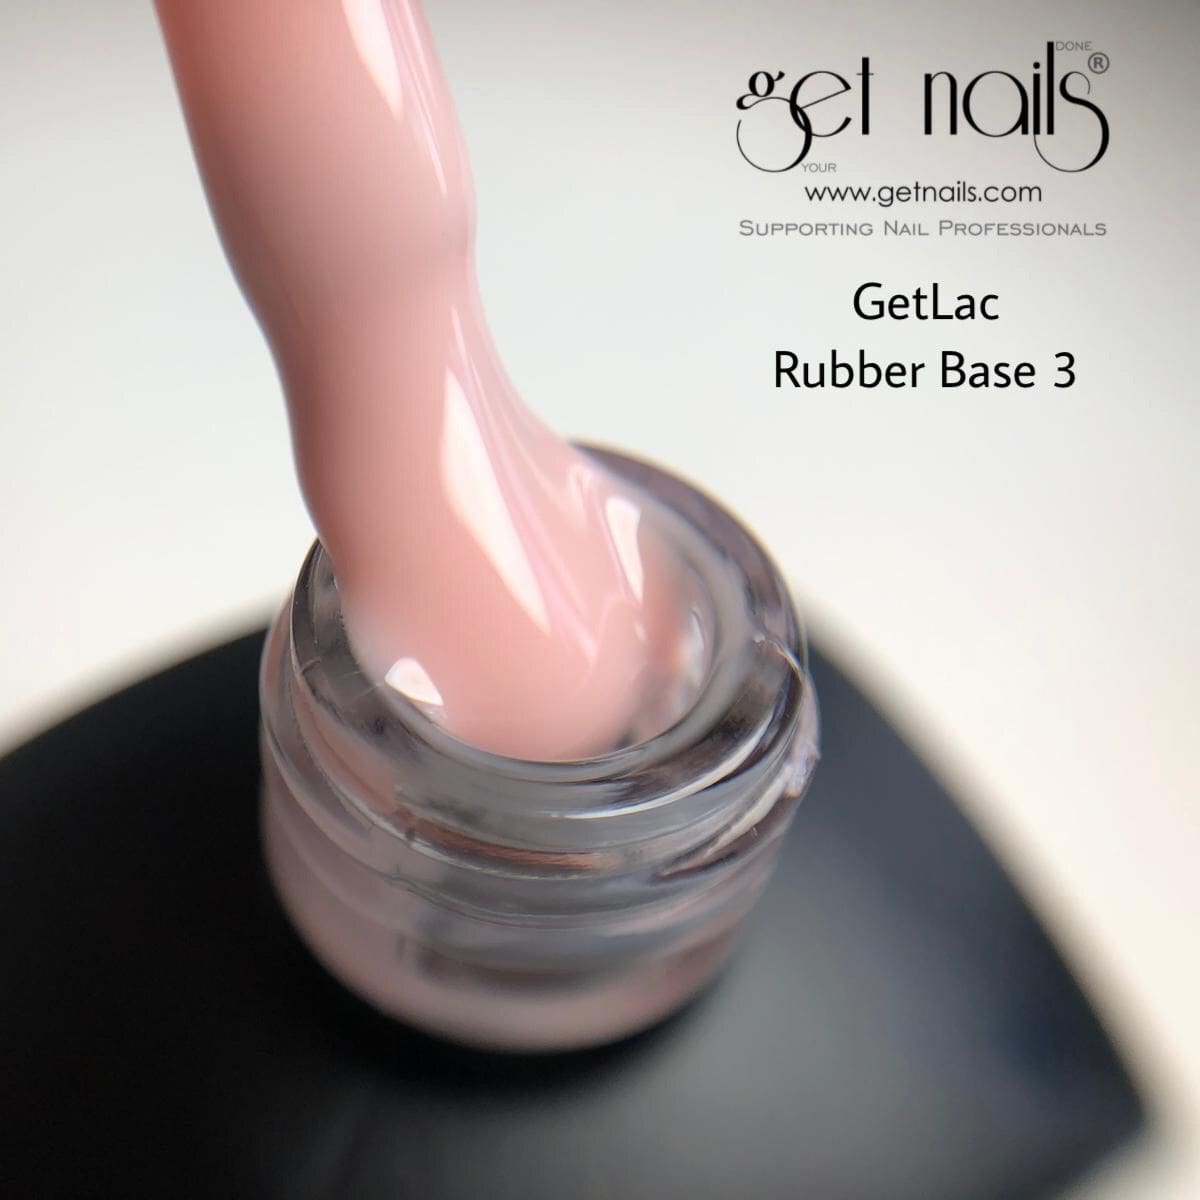 Get Nails Austria - GetLac Rubber Base 3 15g